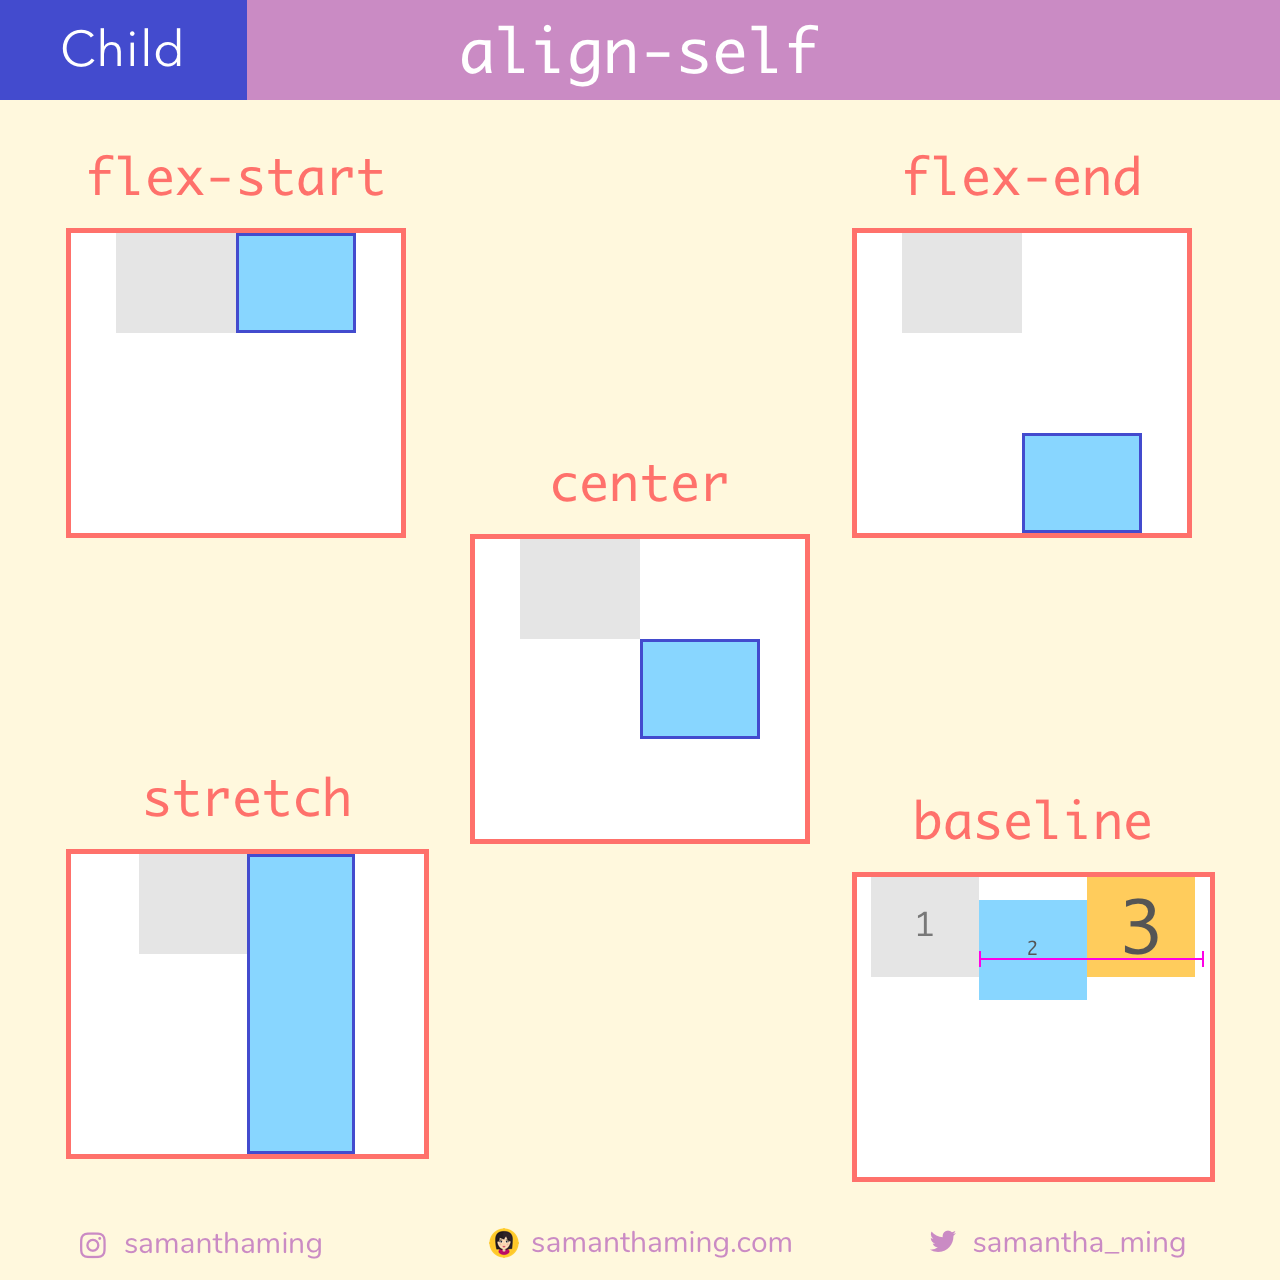 align-self